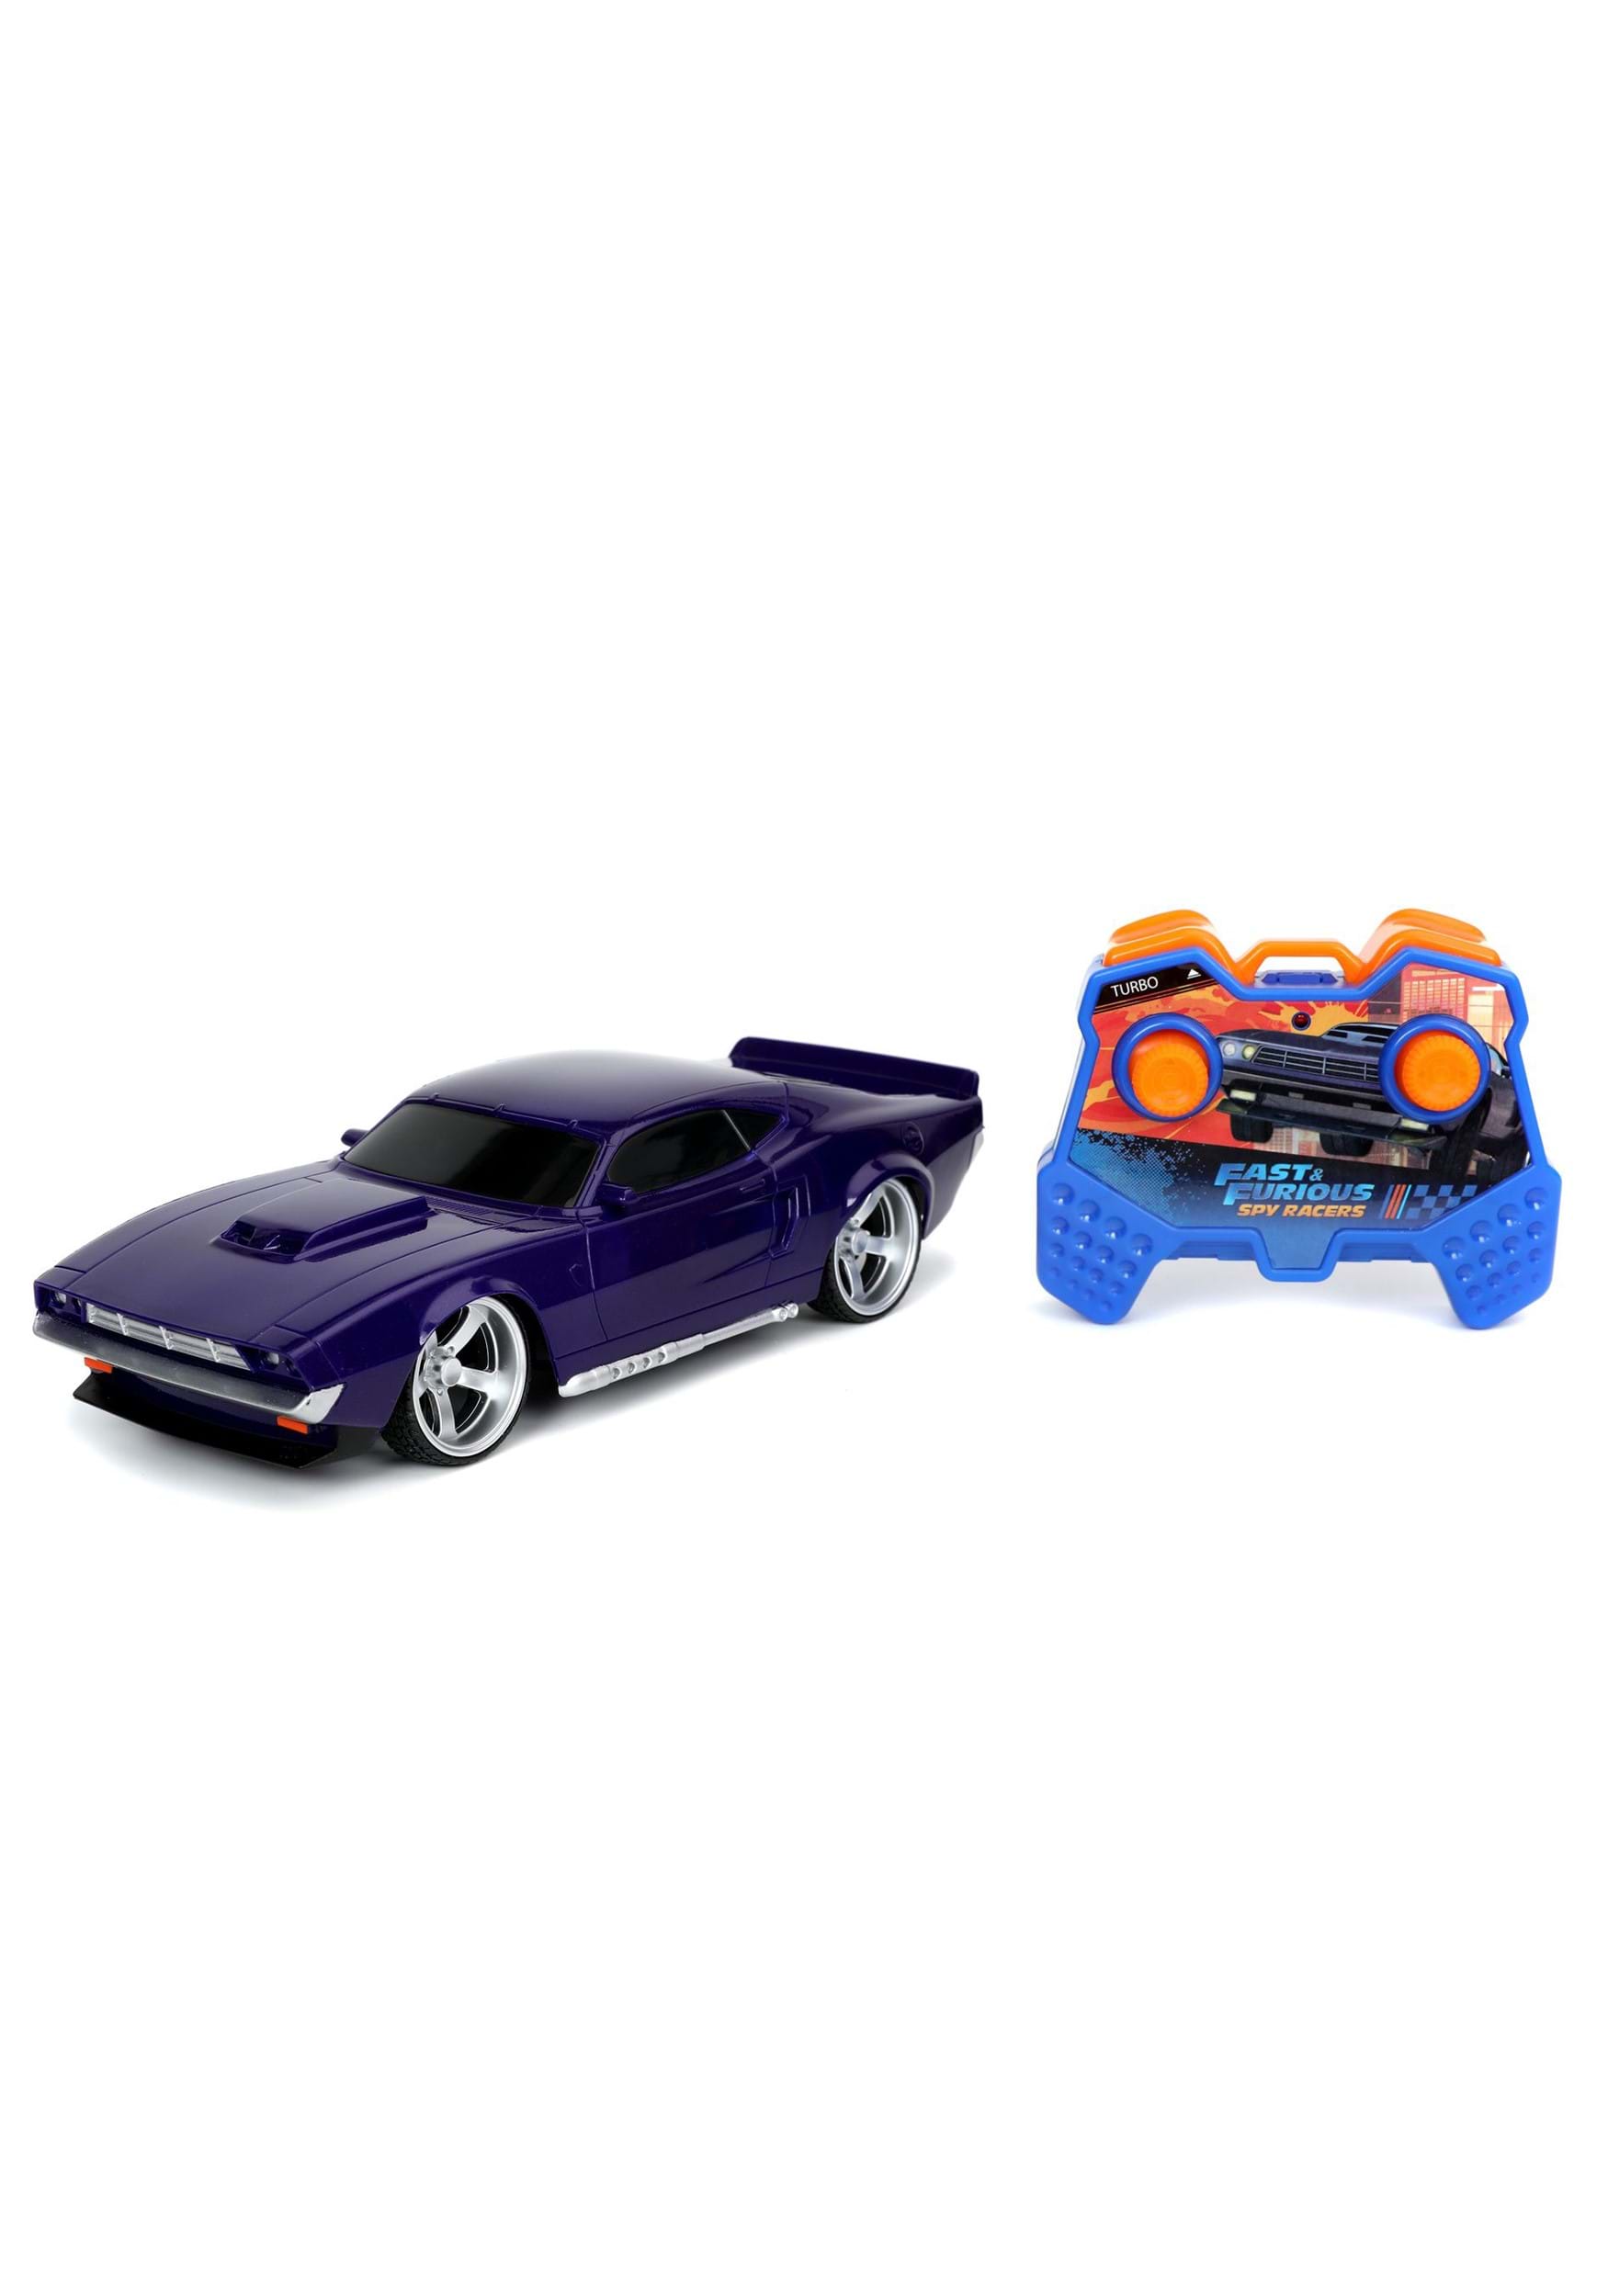 1:24 Fast & Furious Spy Racer Ion Thresher RC Car Toy